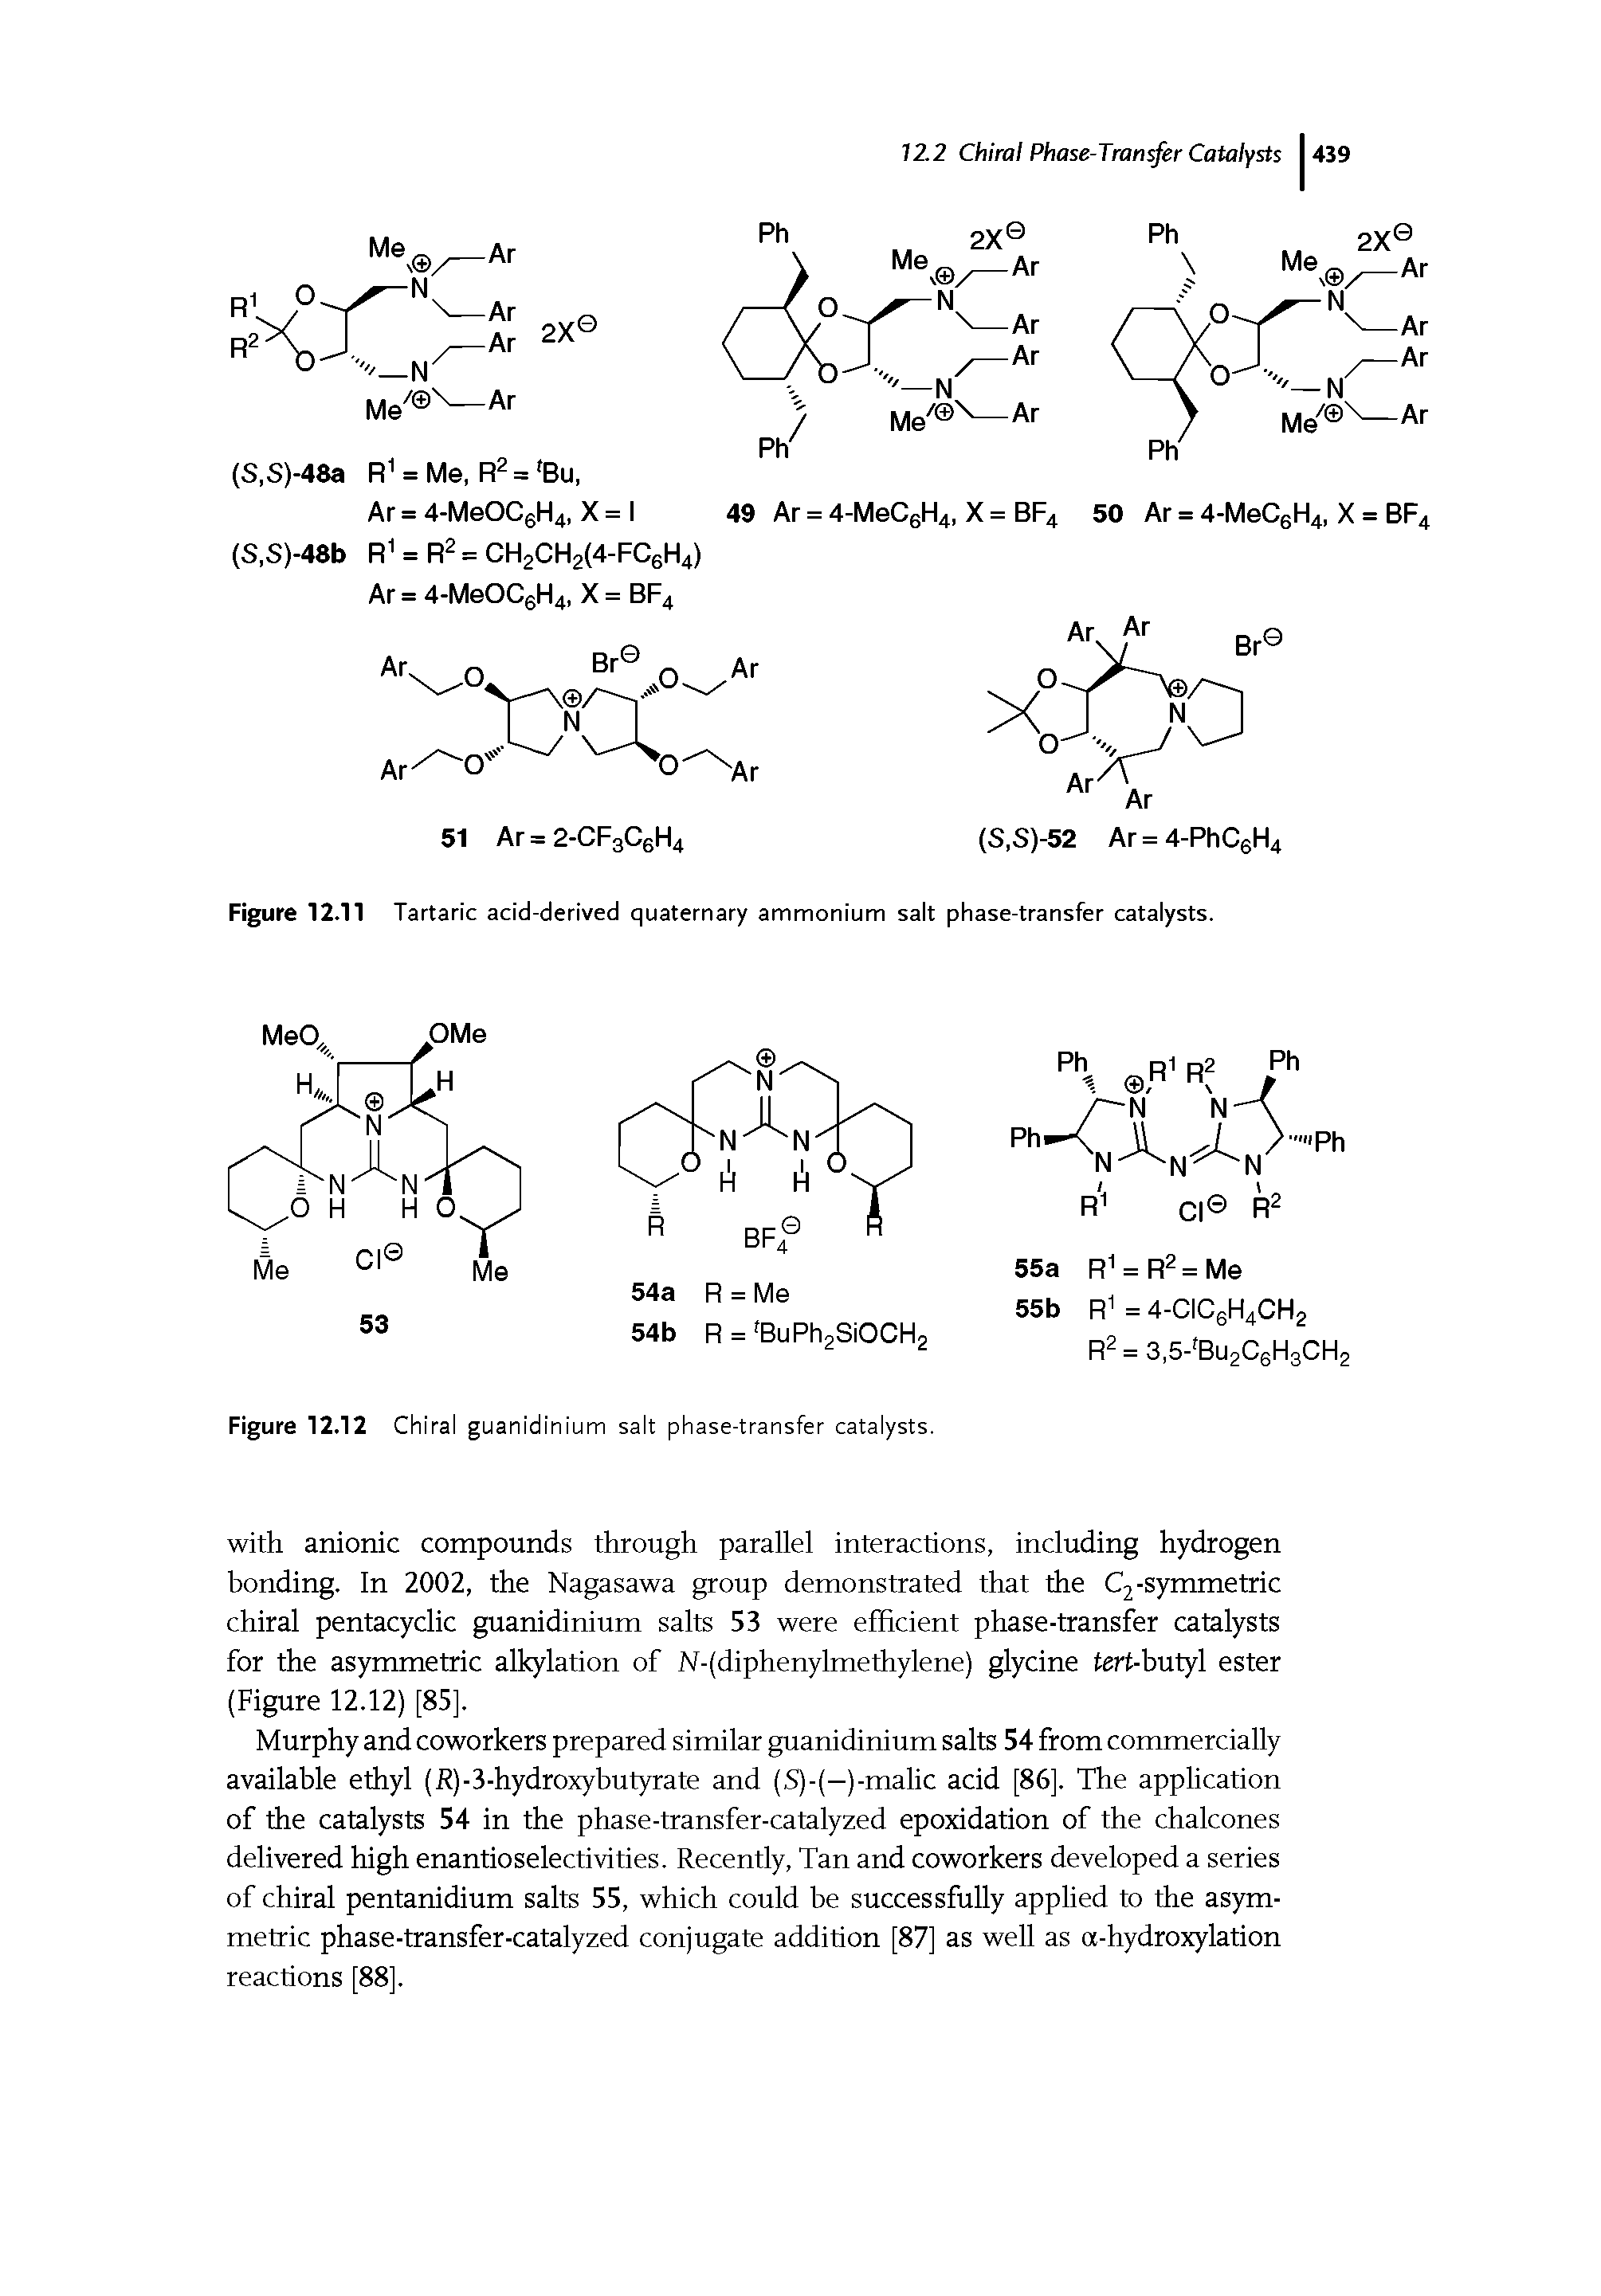 Figure 12.11 Tartaric acid-derived quaternary ammonium salt phase-transfer catalysts.